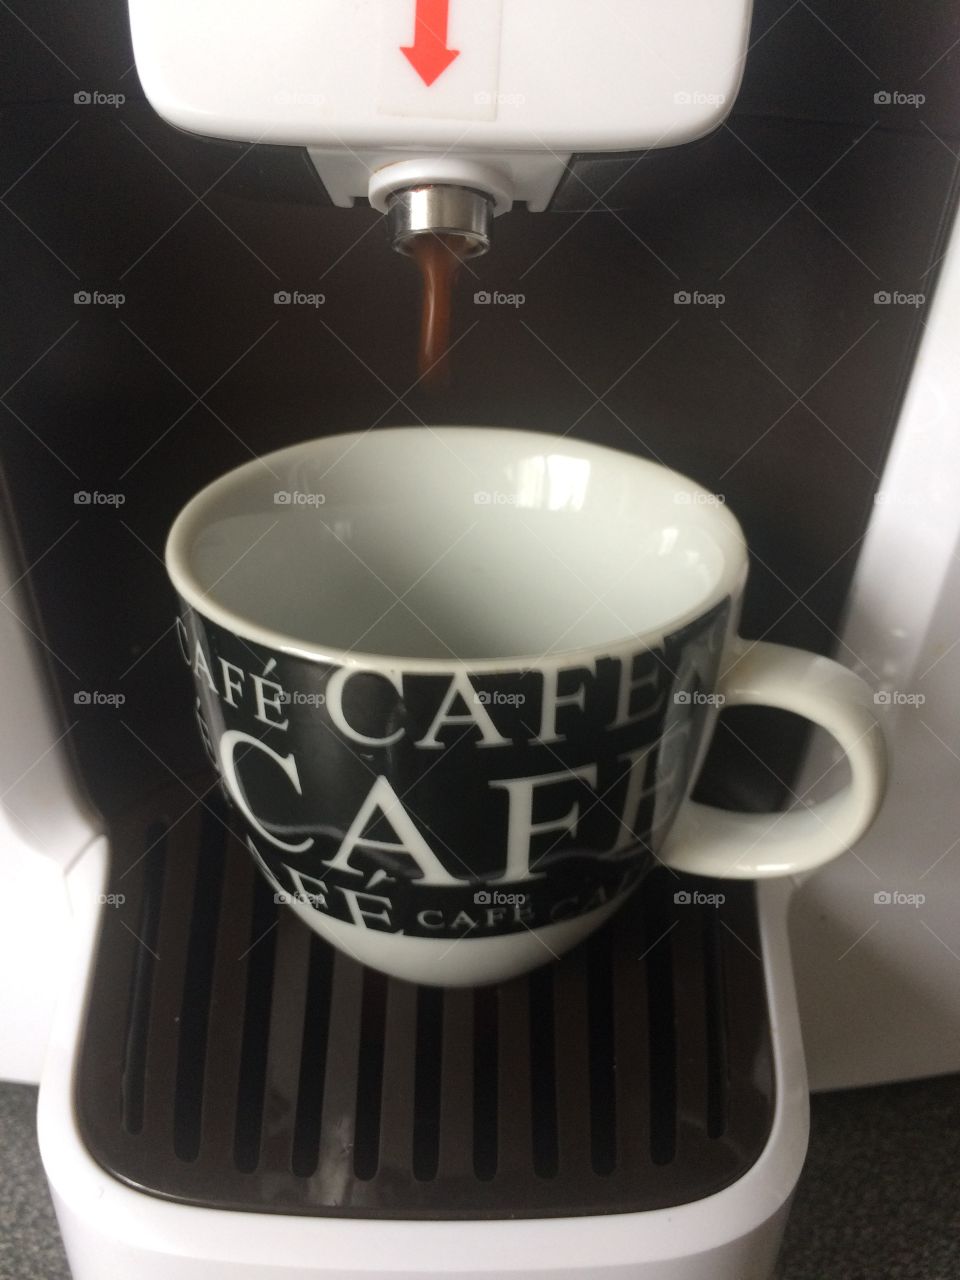 Making espresso coffee
